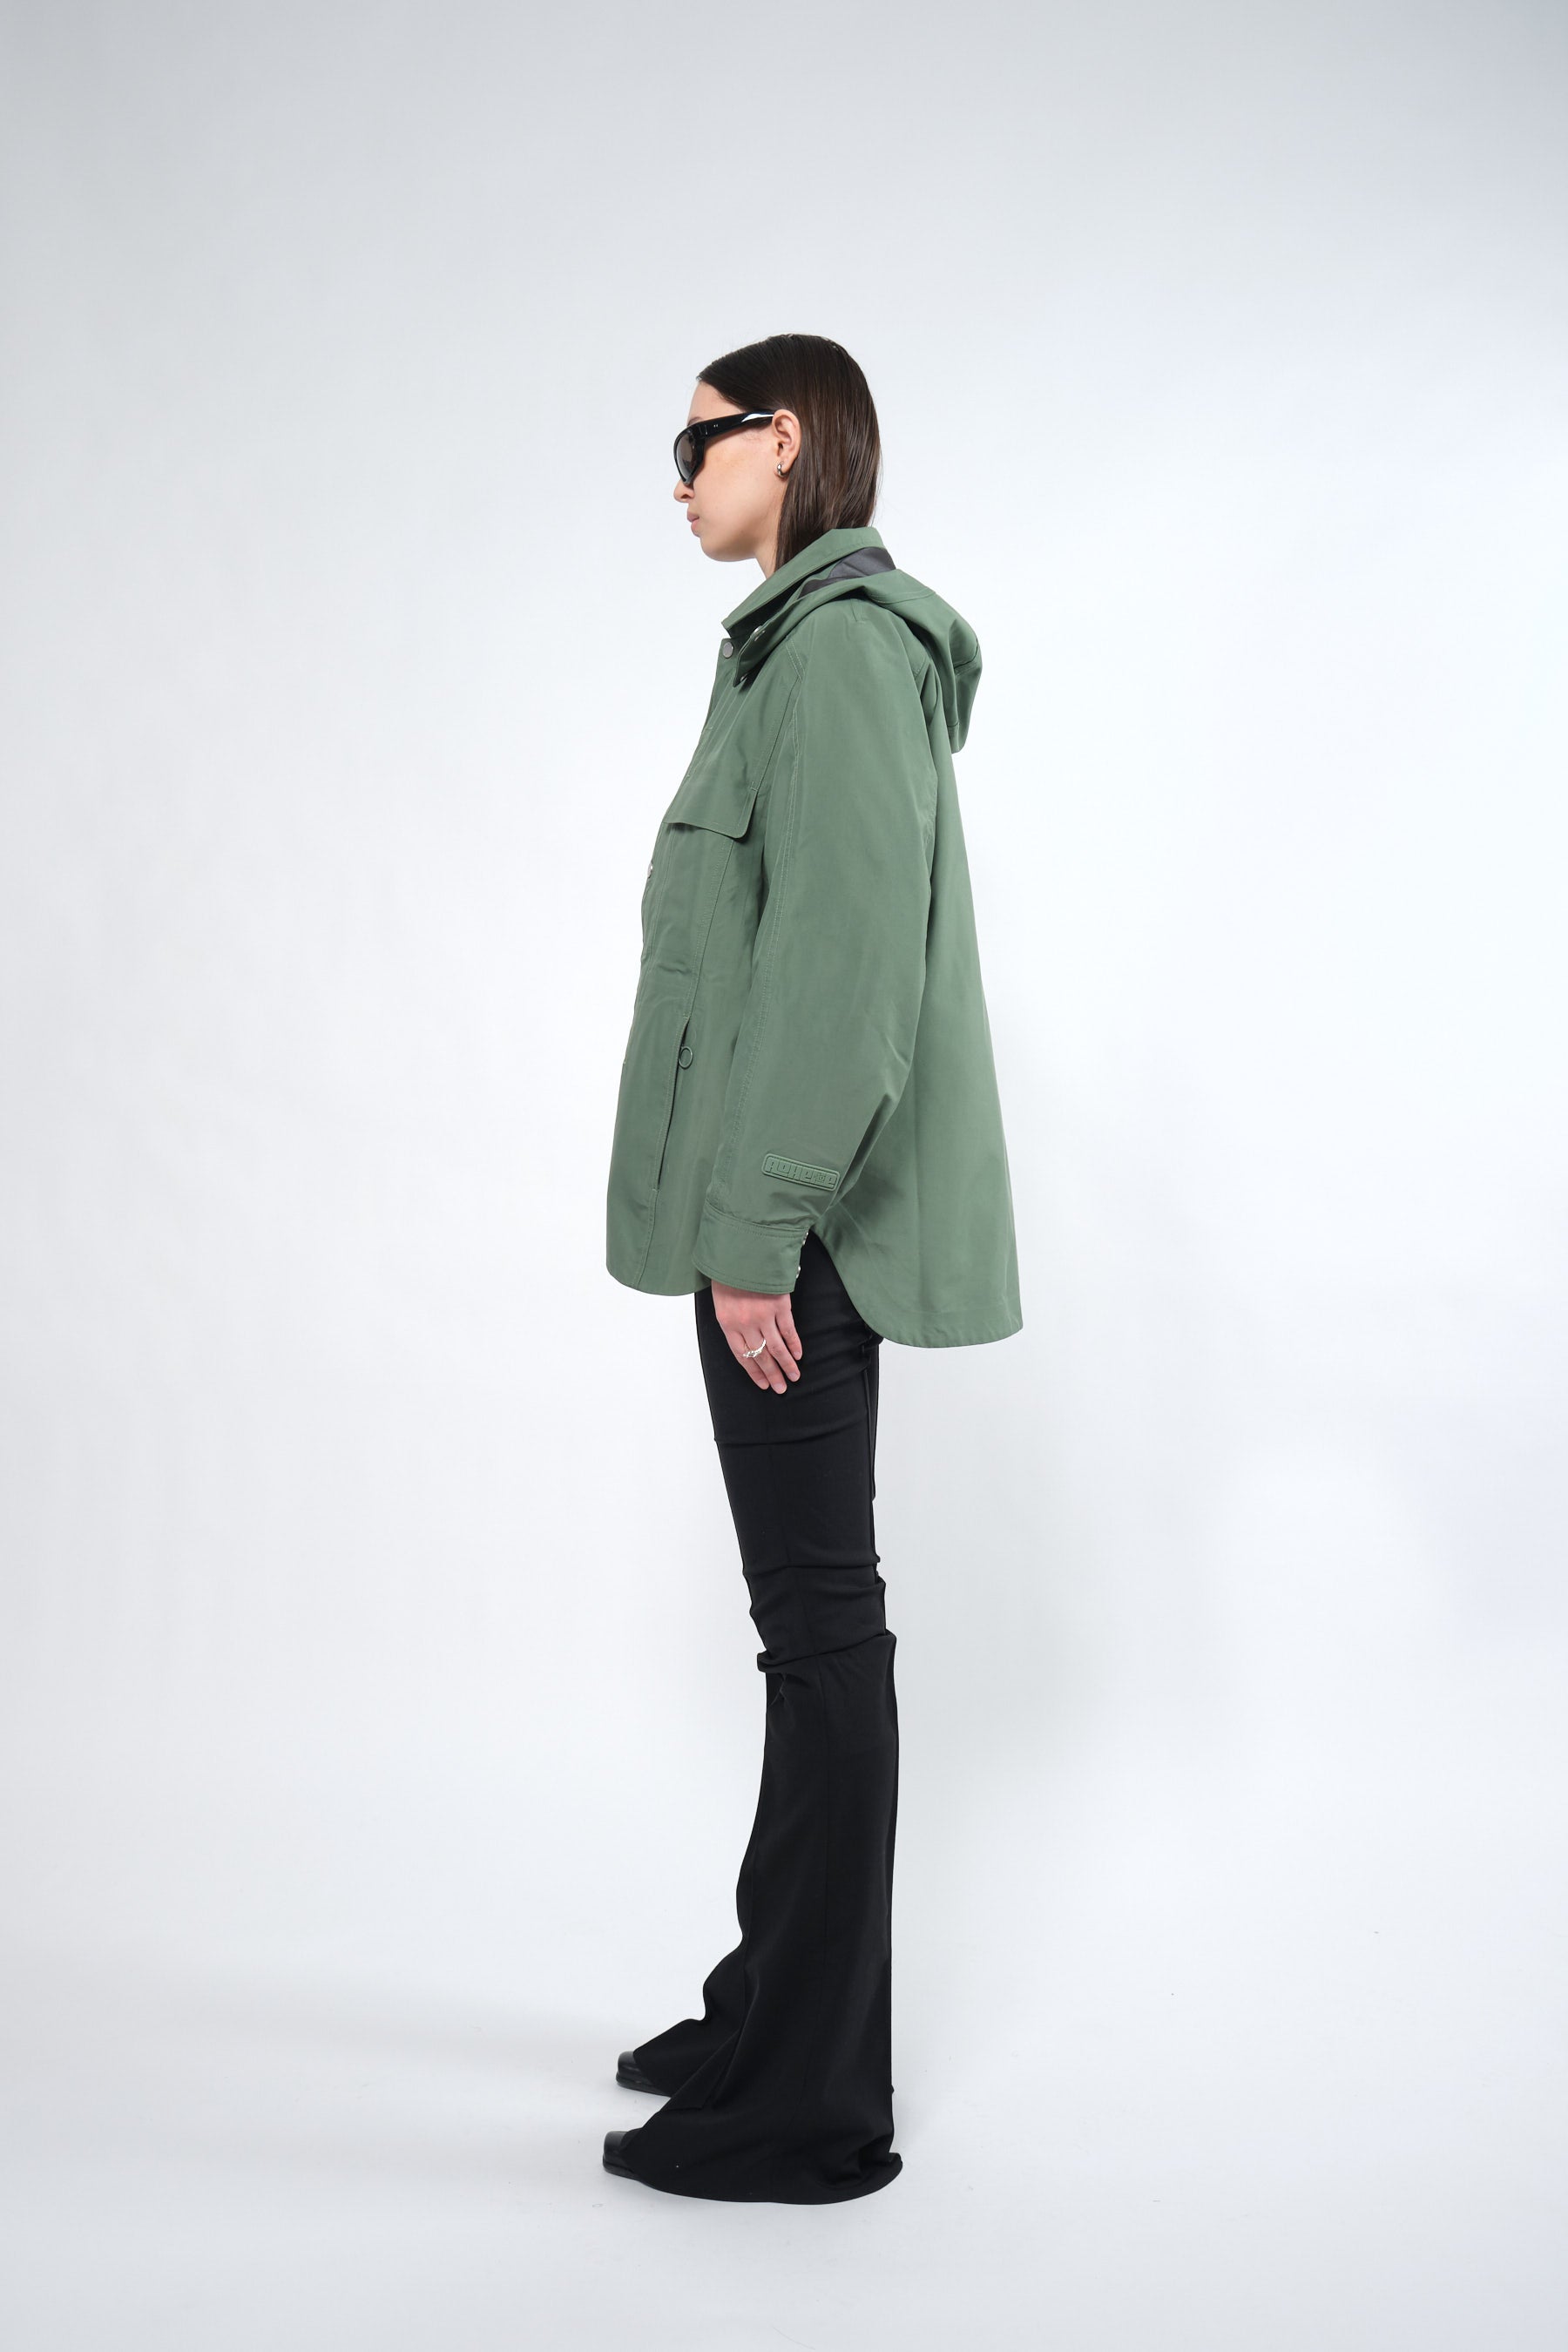  3L Green Waterproof Rain Jacket with Hood - Adhere To  - 6